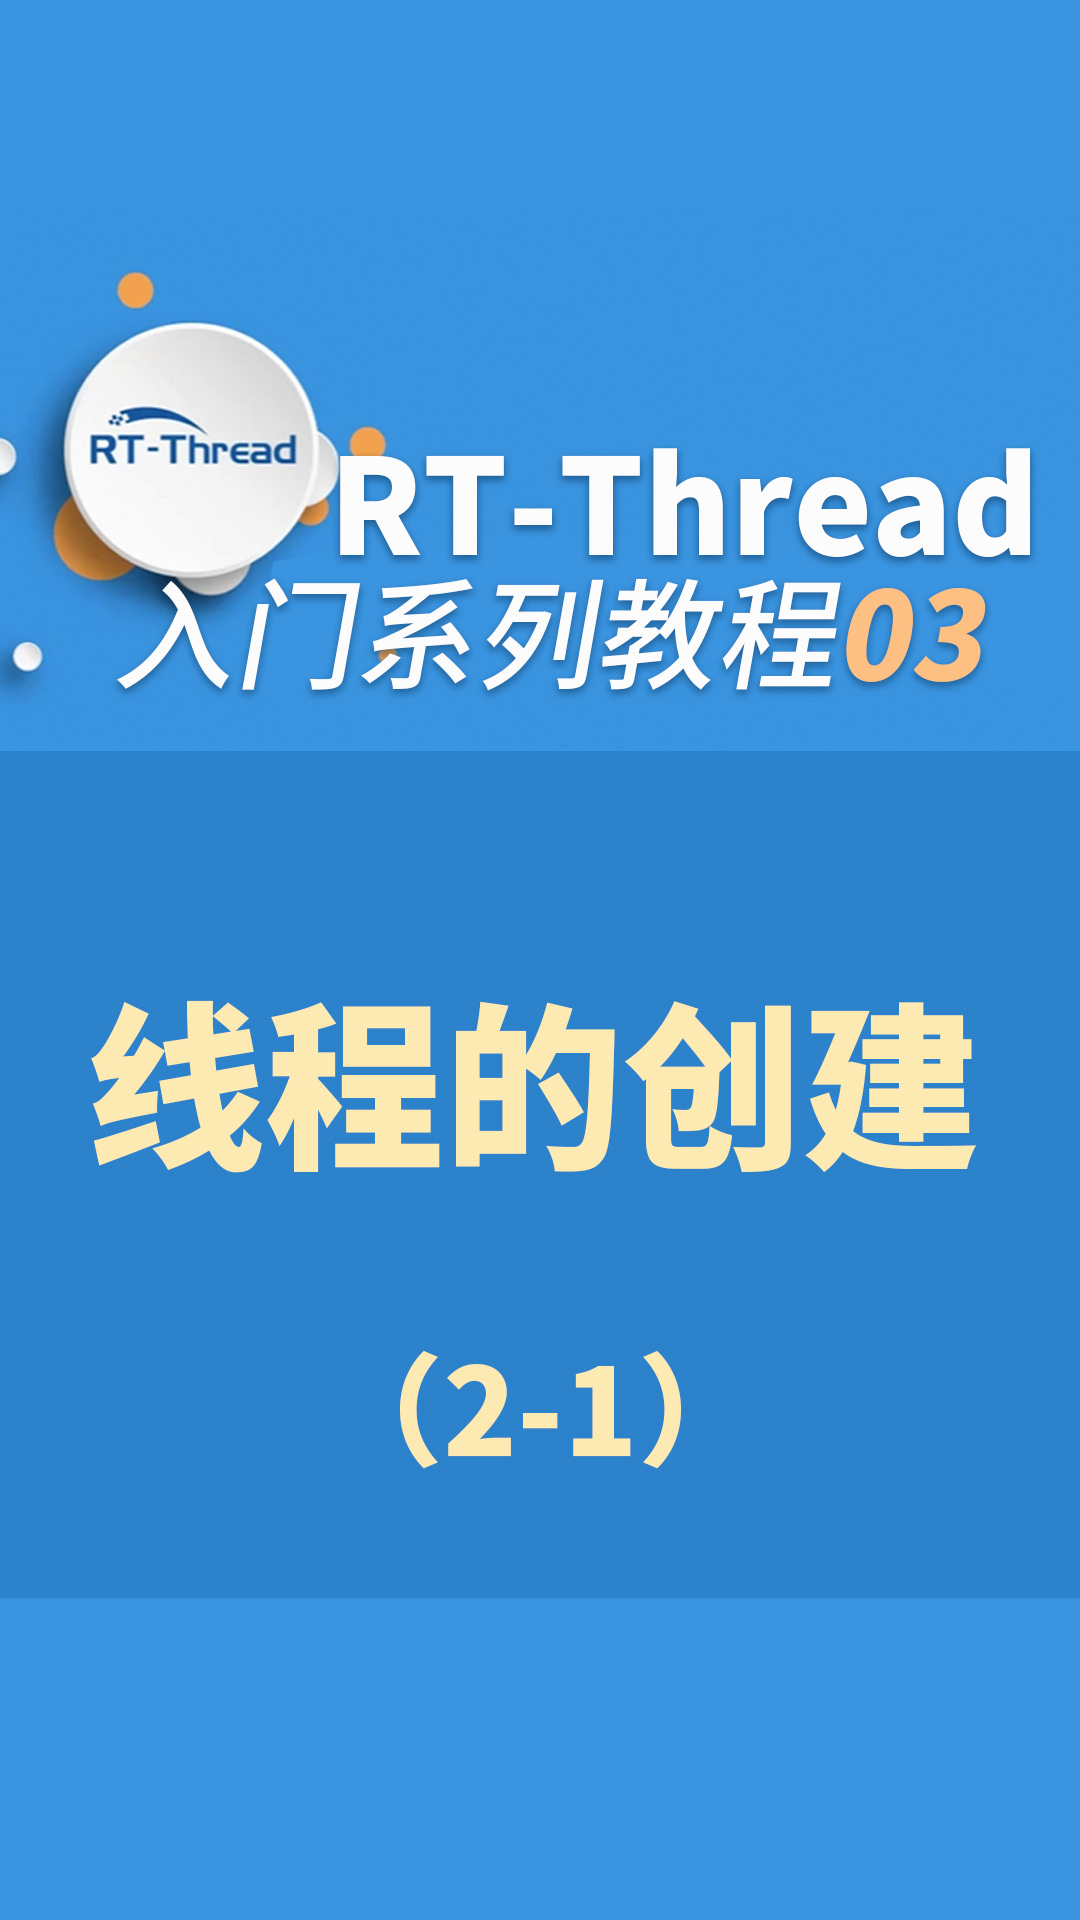 RT-Thread内核入门指南 - 3-3-线程的创建2-1#嵌入式开发 